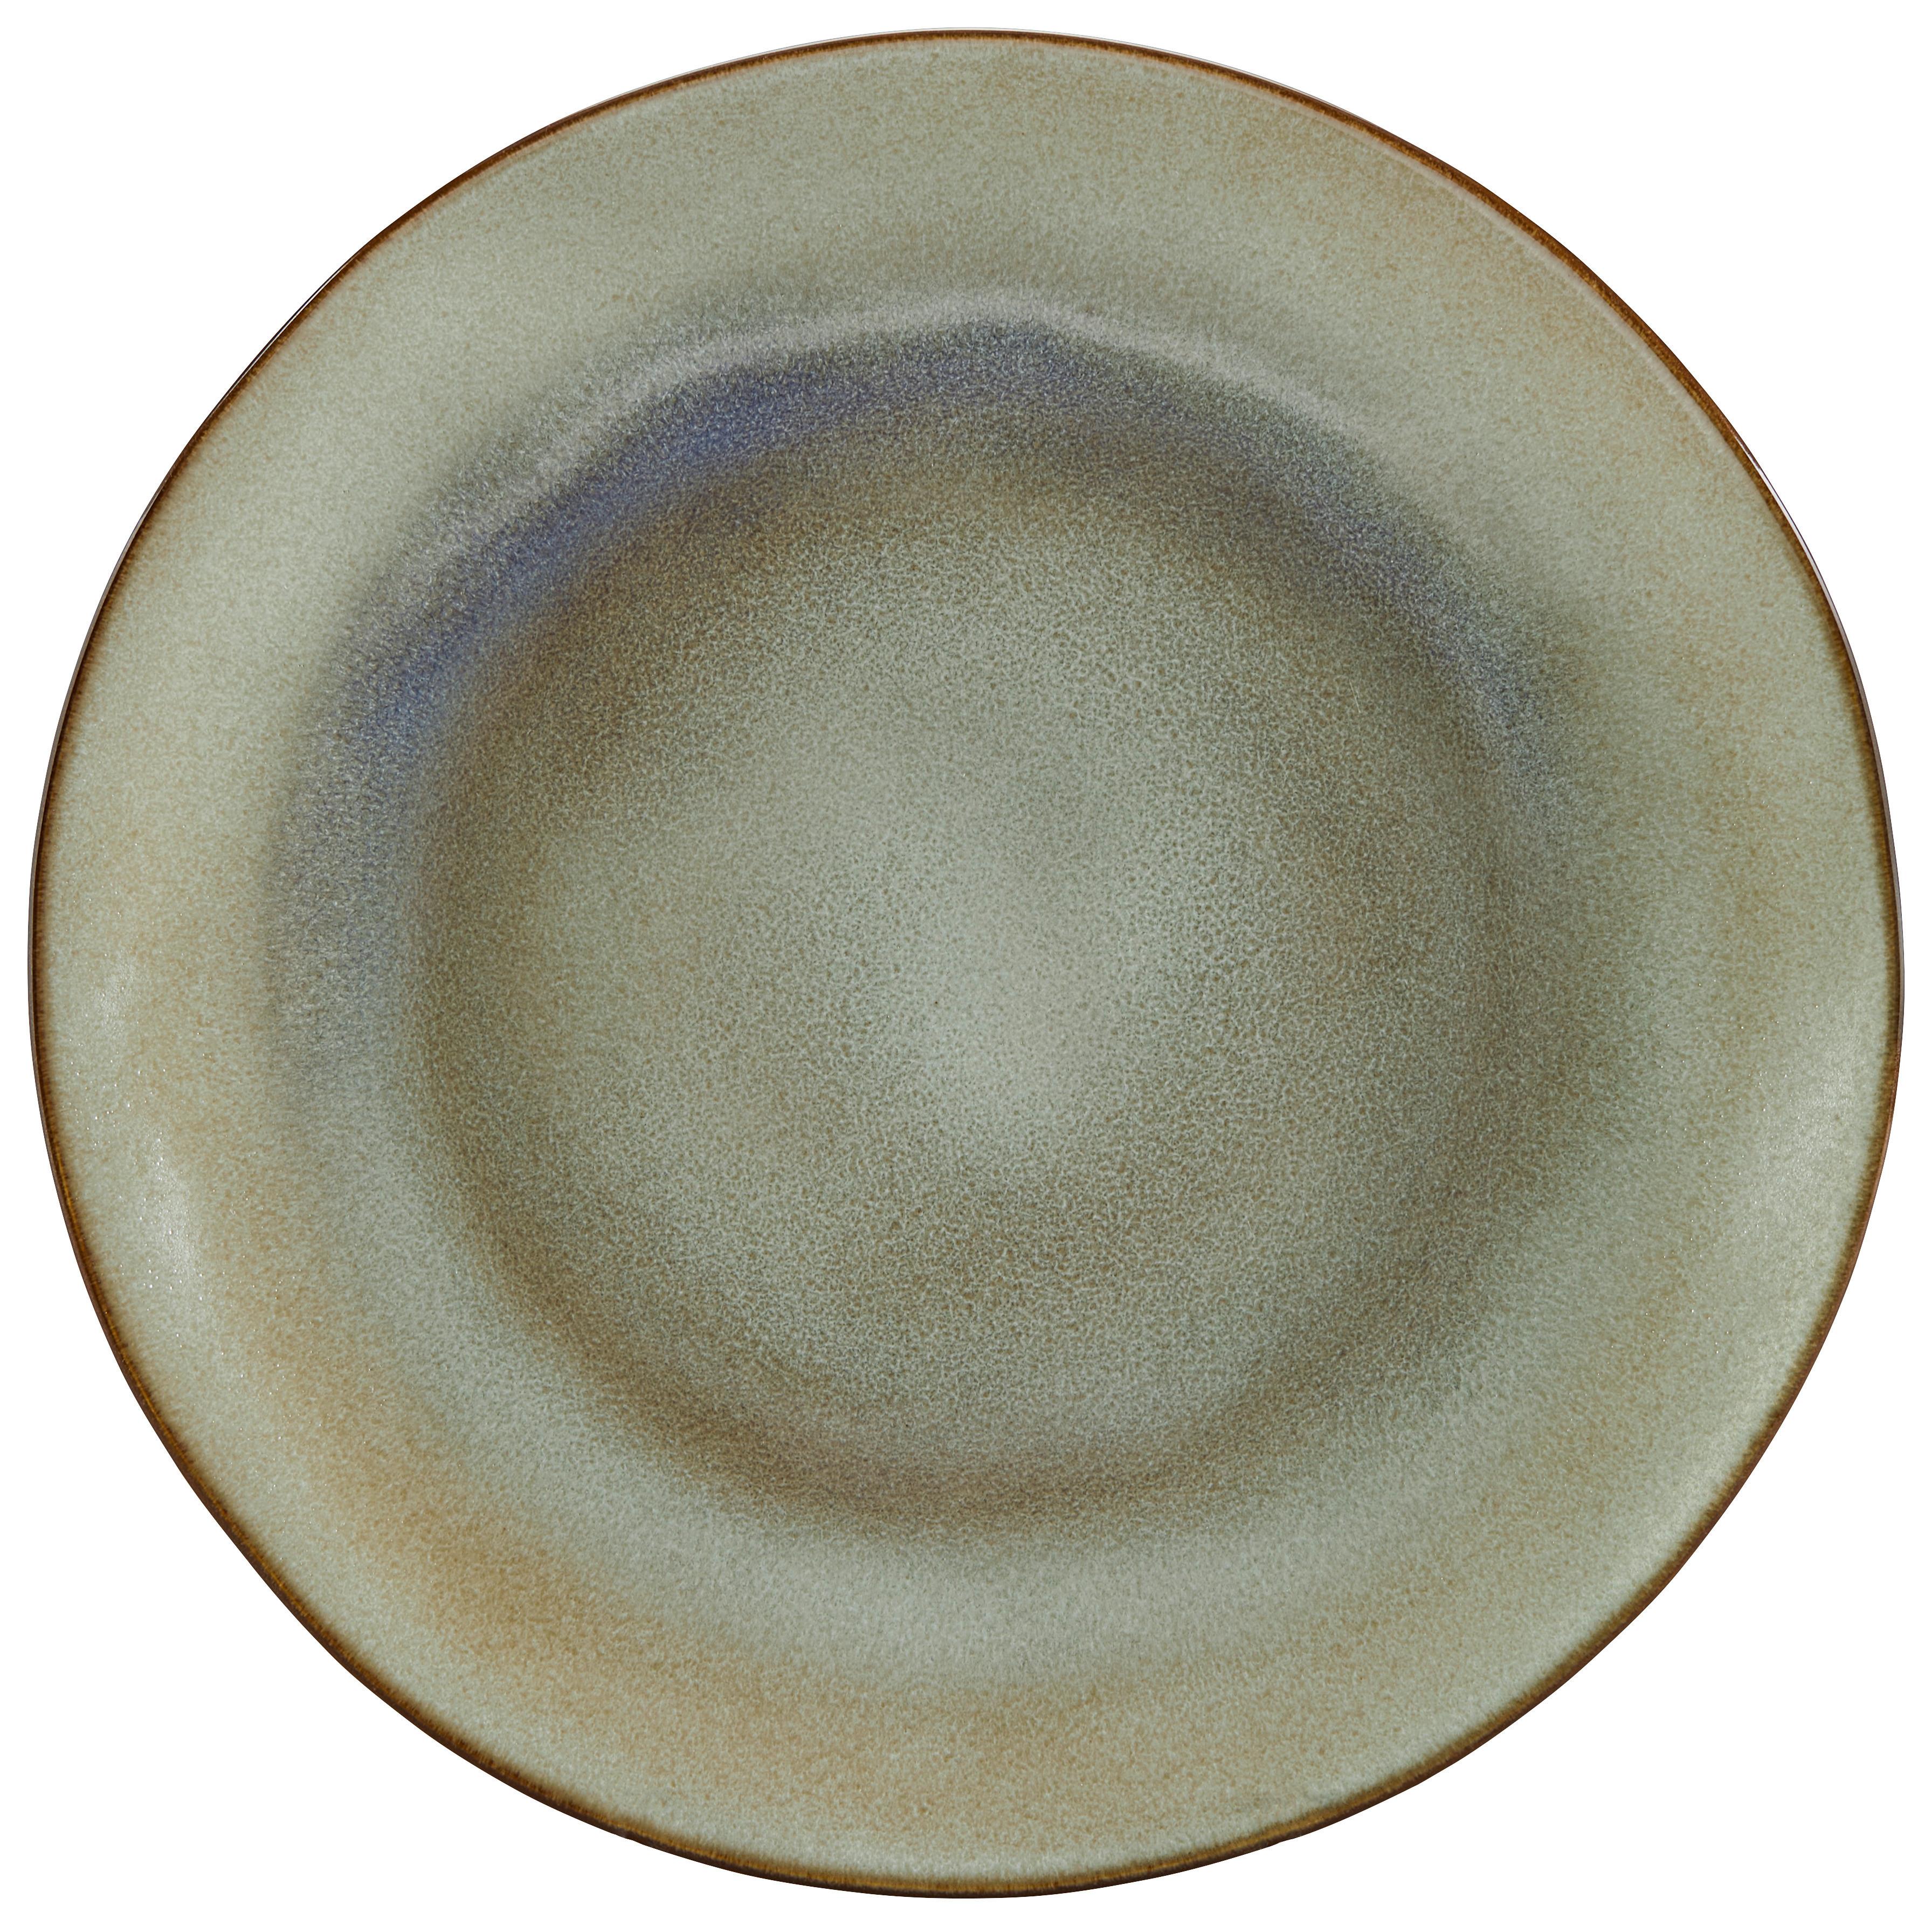 Speiseteller Keramik Rund Iryna Ca 28 cm - Braun, MODERN, Keramik (28/3cm) - Luca Bessoni